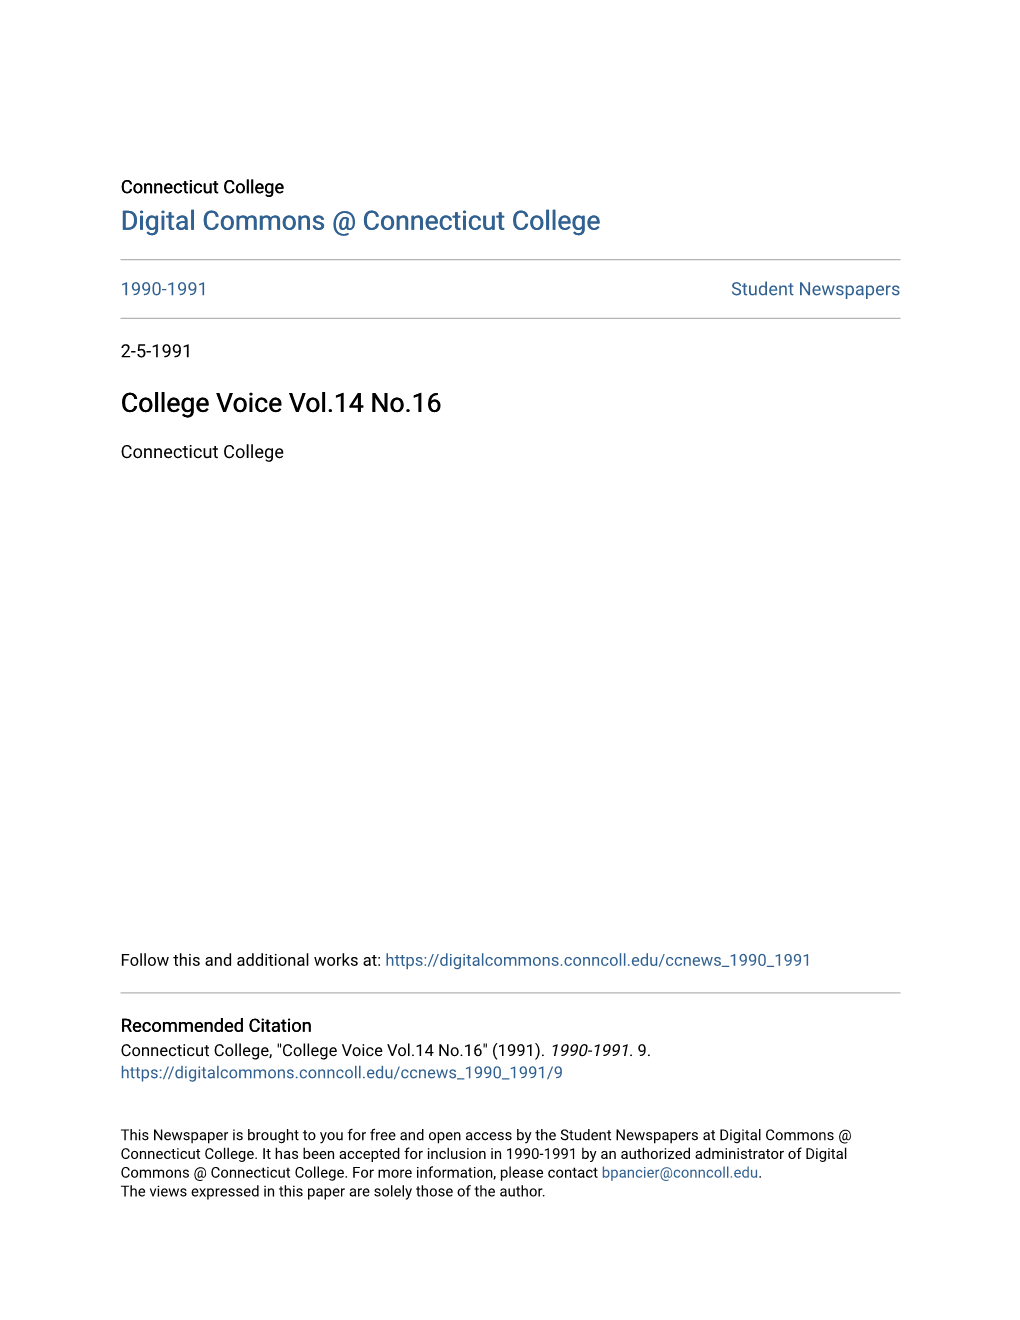 College Voice Vol.14 No.16